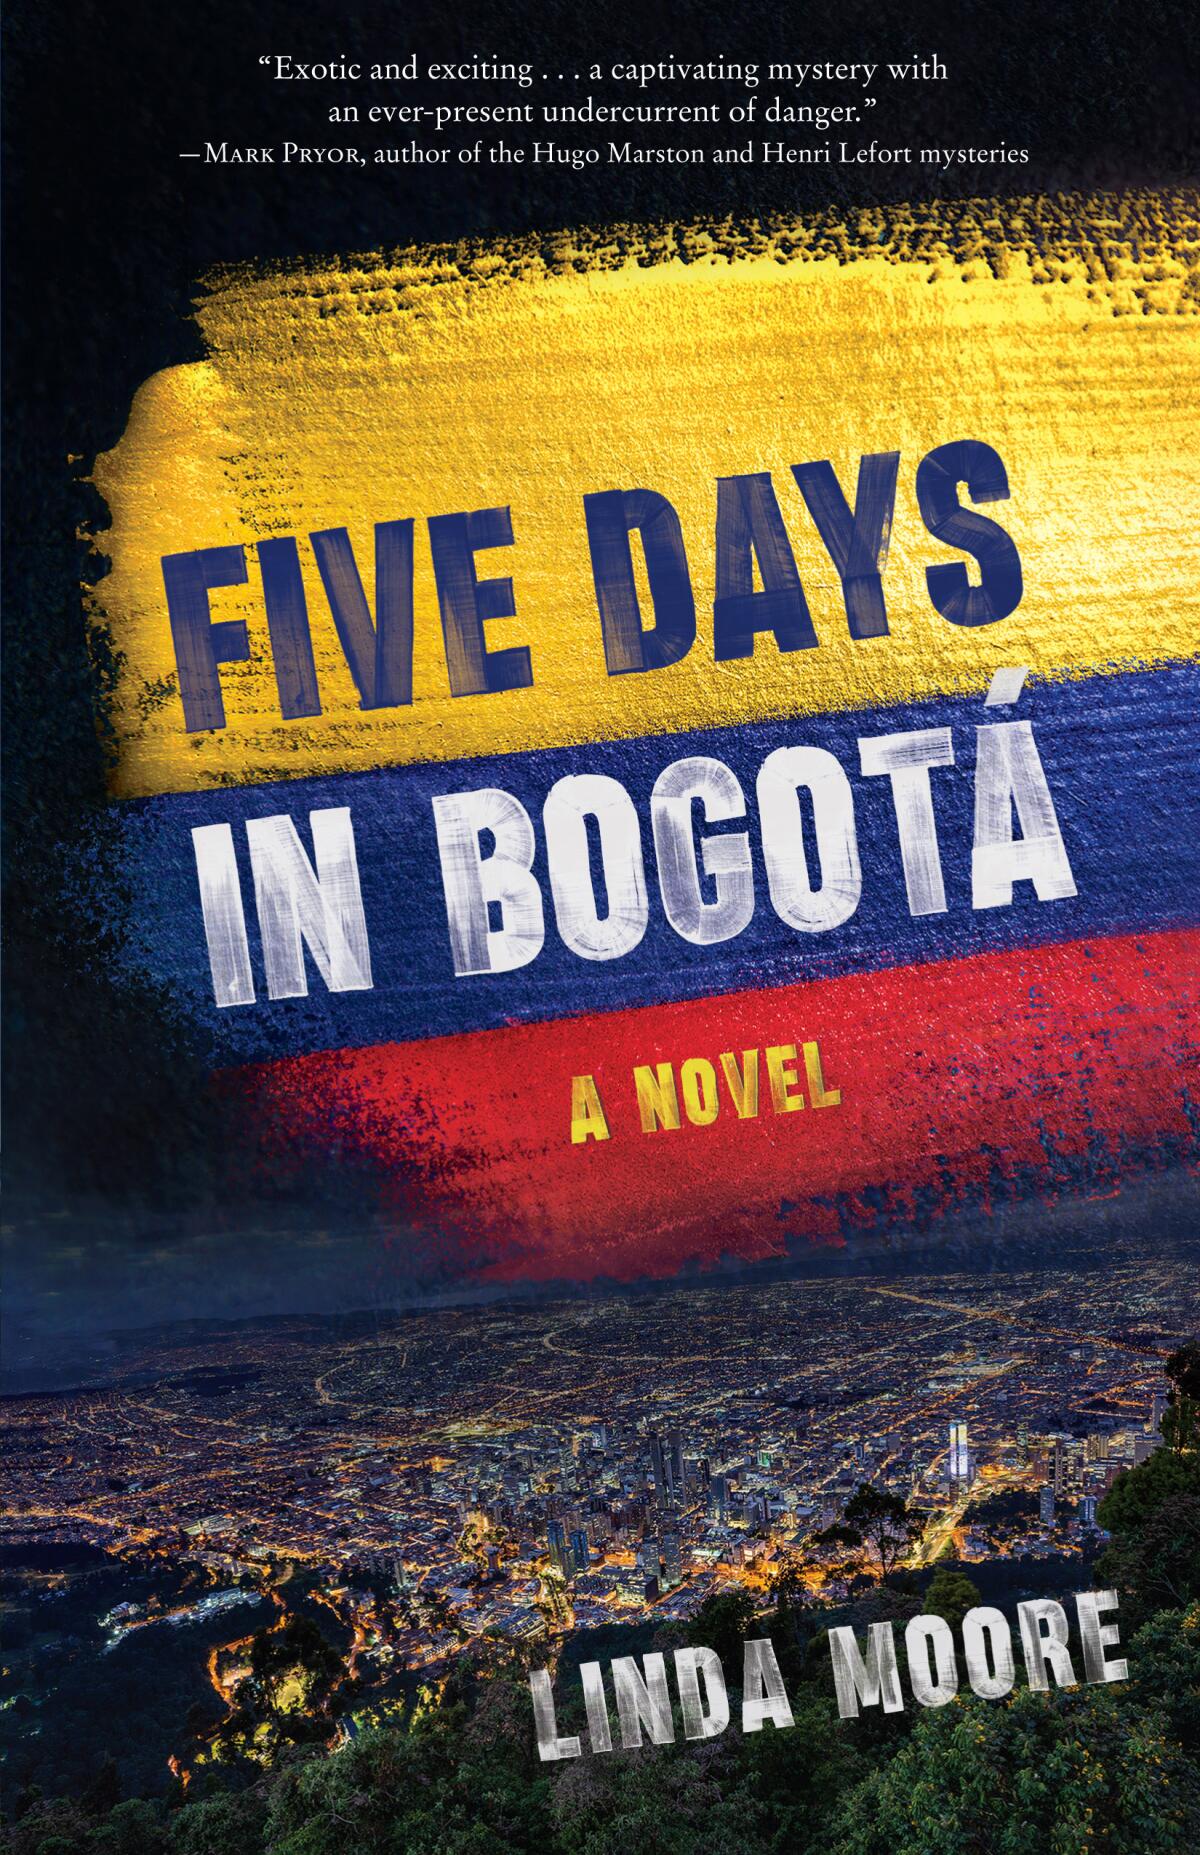 Book cover for Linda Moore's novel "Five Days in Bogota."